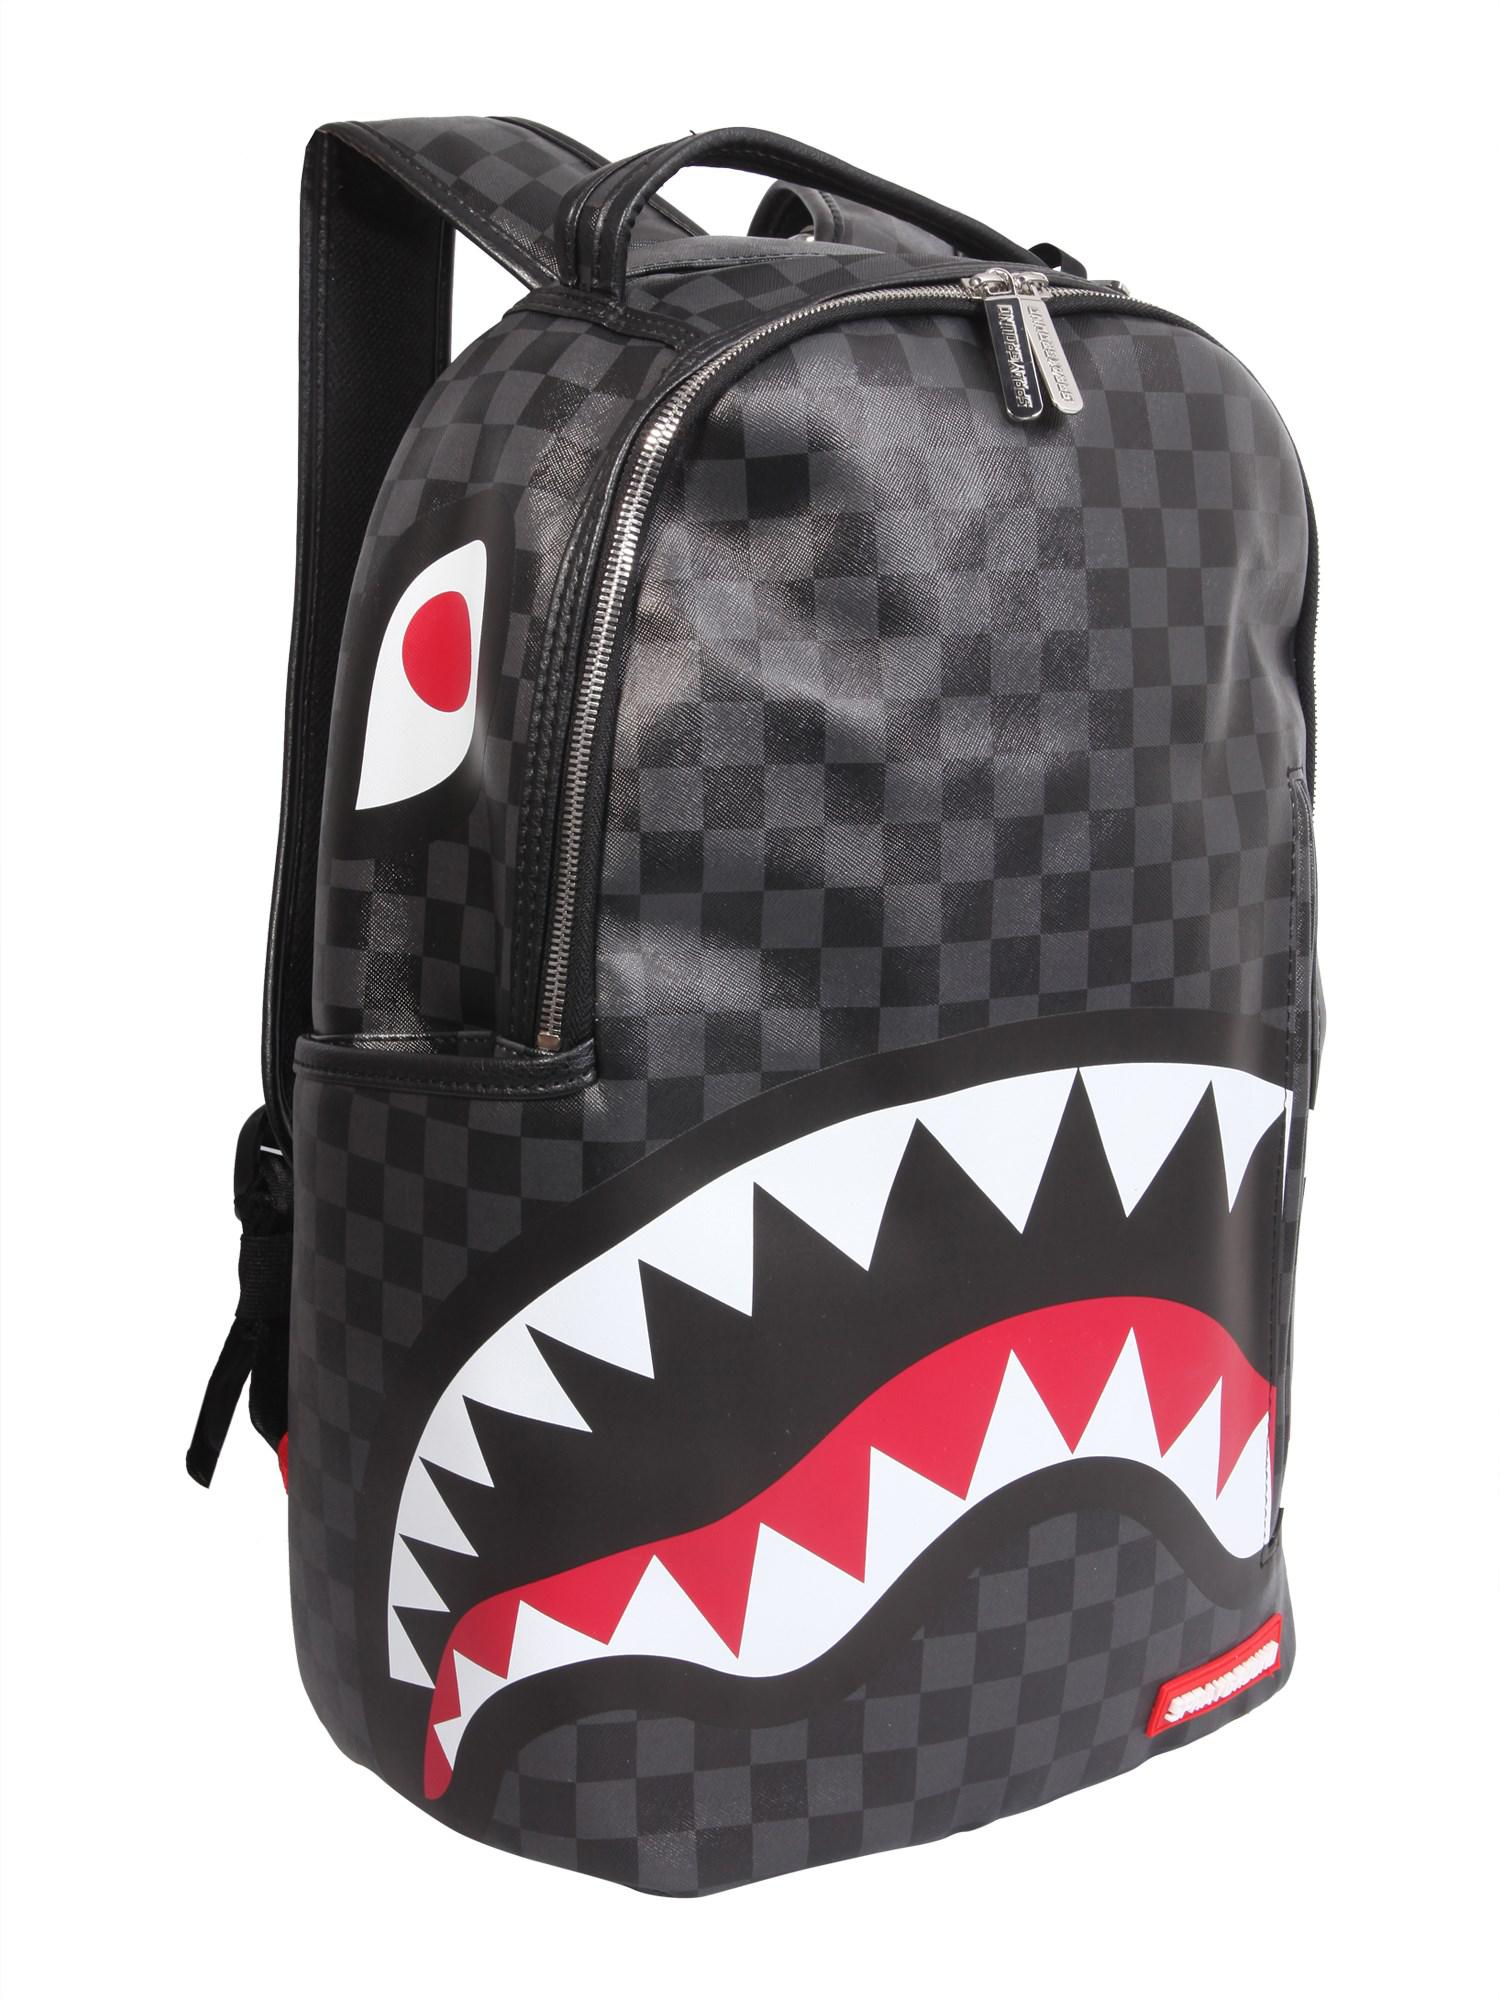 Lyst - Sprayground Shark In Paris Backpack in Black for Men